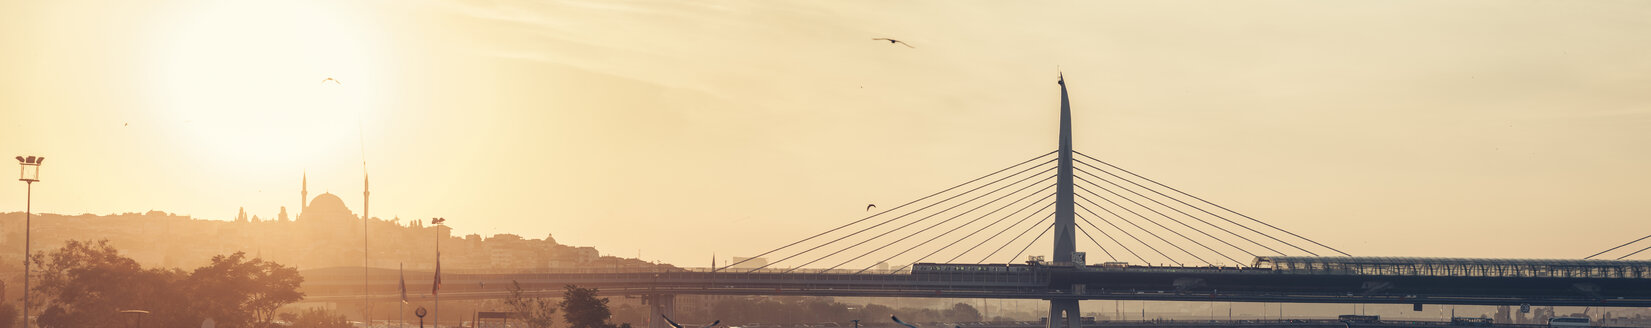 Türkei, Istanbul, Goldenes Horn, Bosporus-Brücke bei Sonnenuntergang - BZF000349